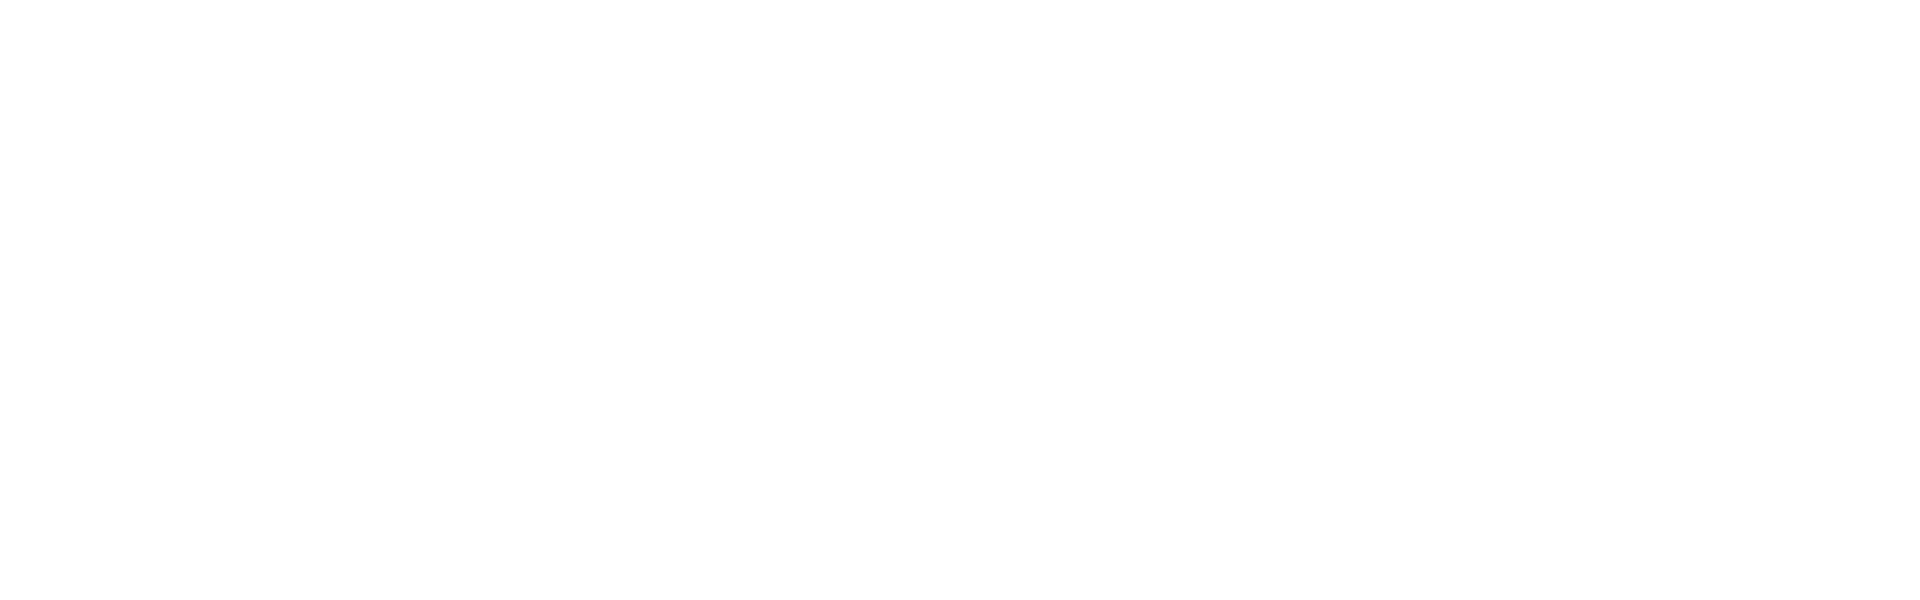 travelgow logo